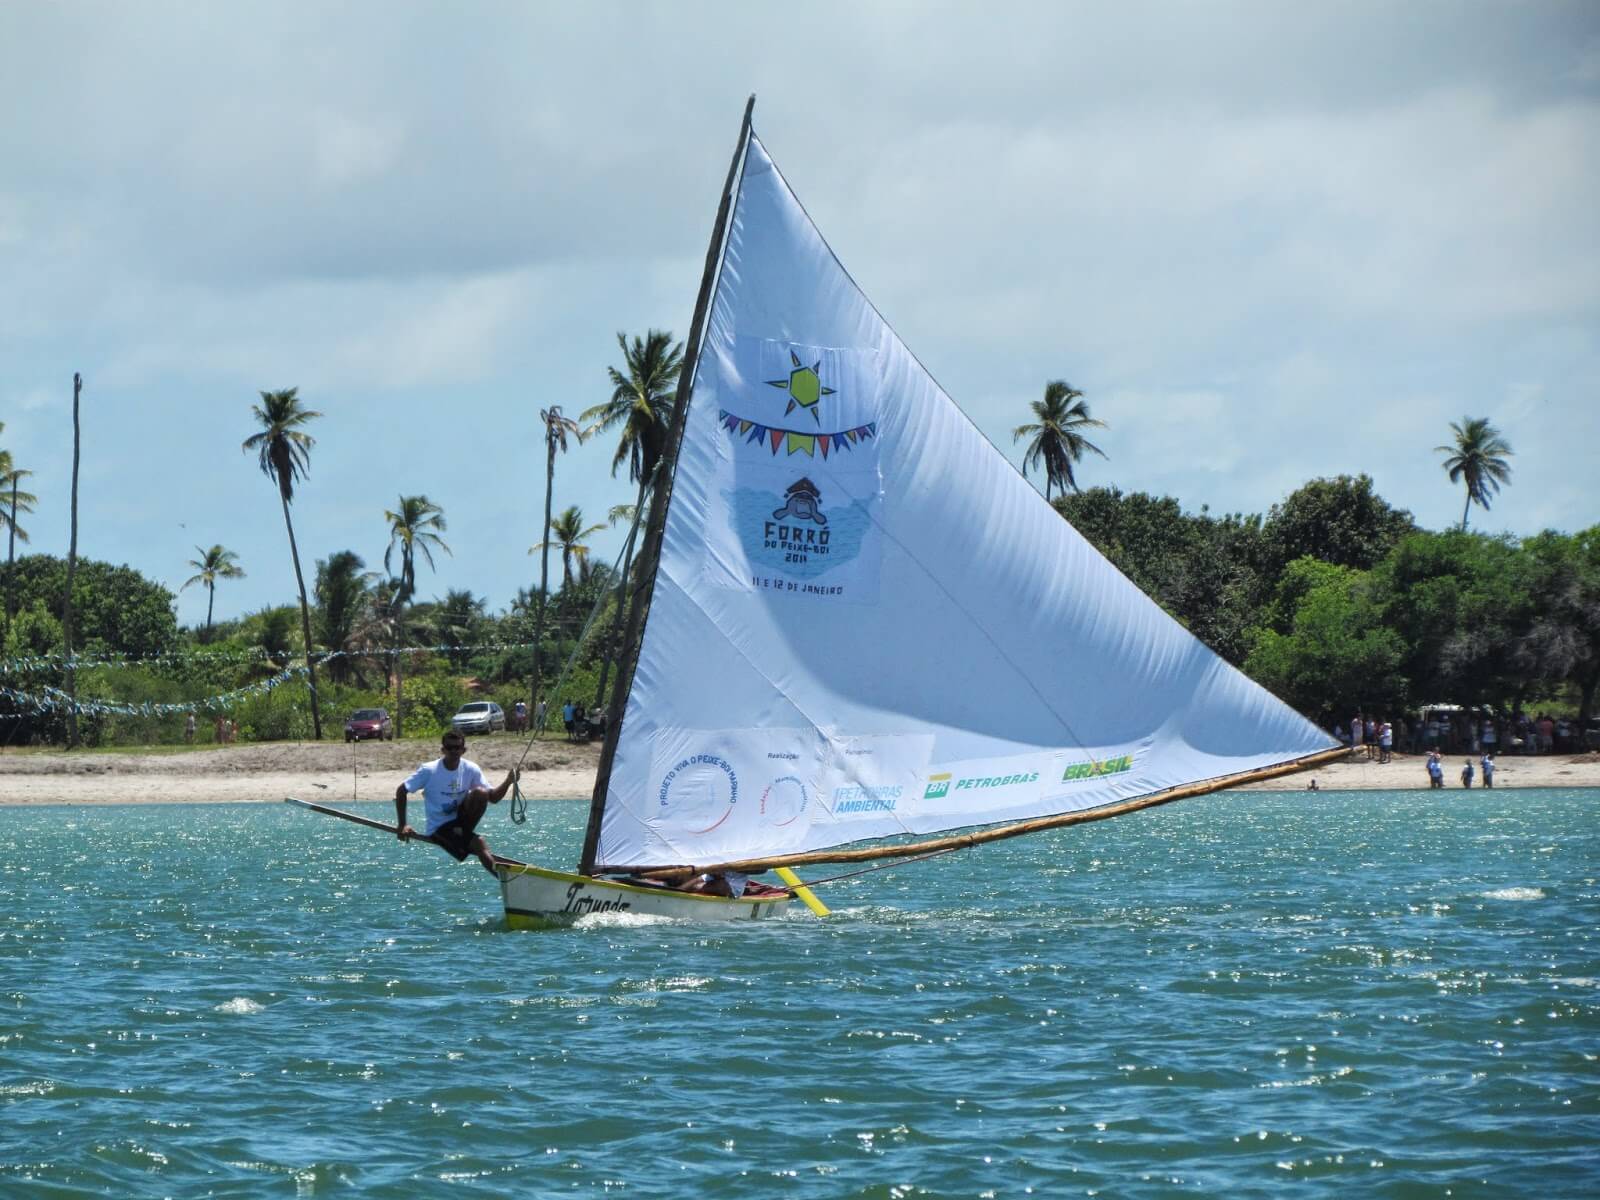 Regata do Peixe-Boi integra comunidades e se consolida como importante evento esportivo na Barra de Mamanguape